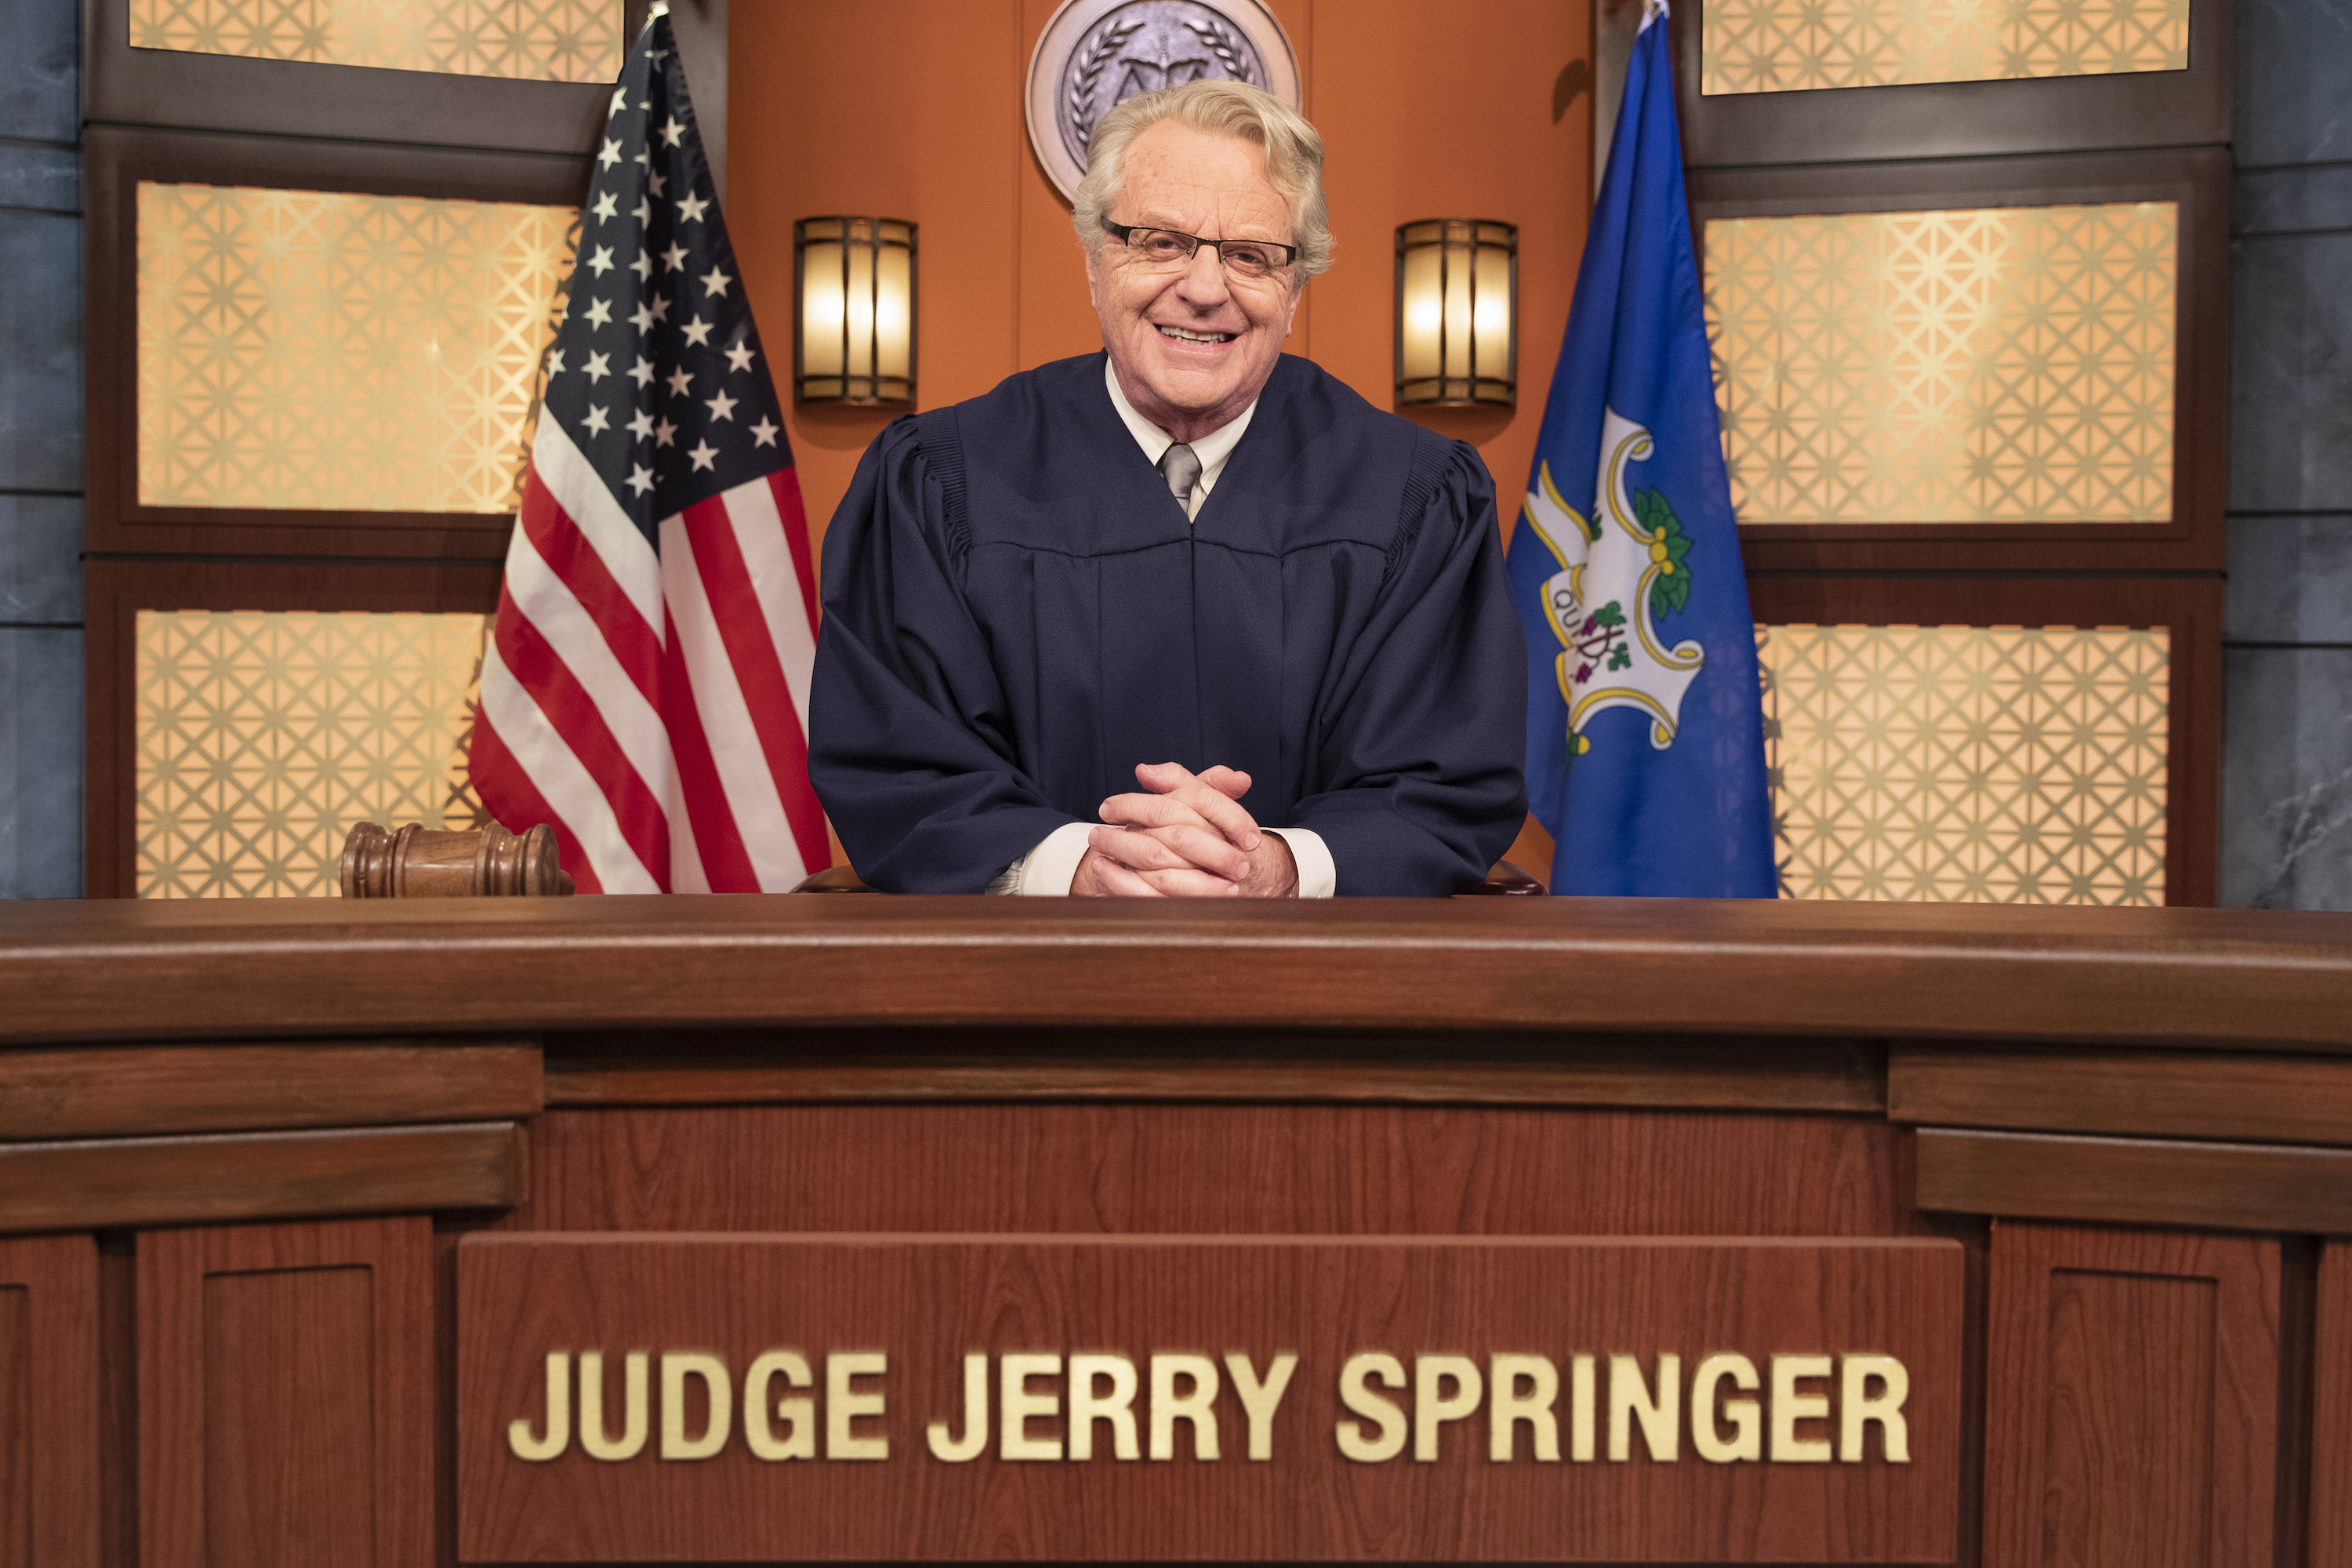 Jerry springer show